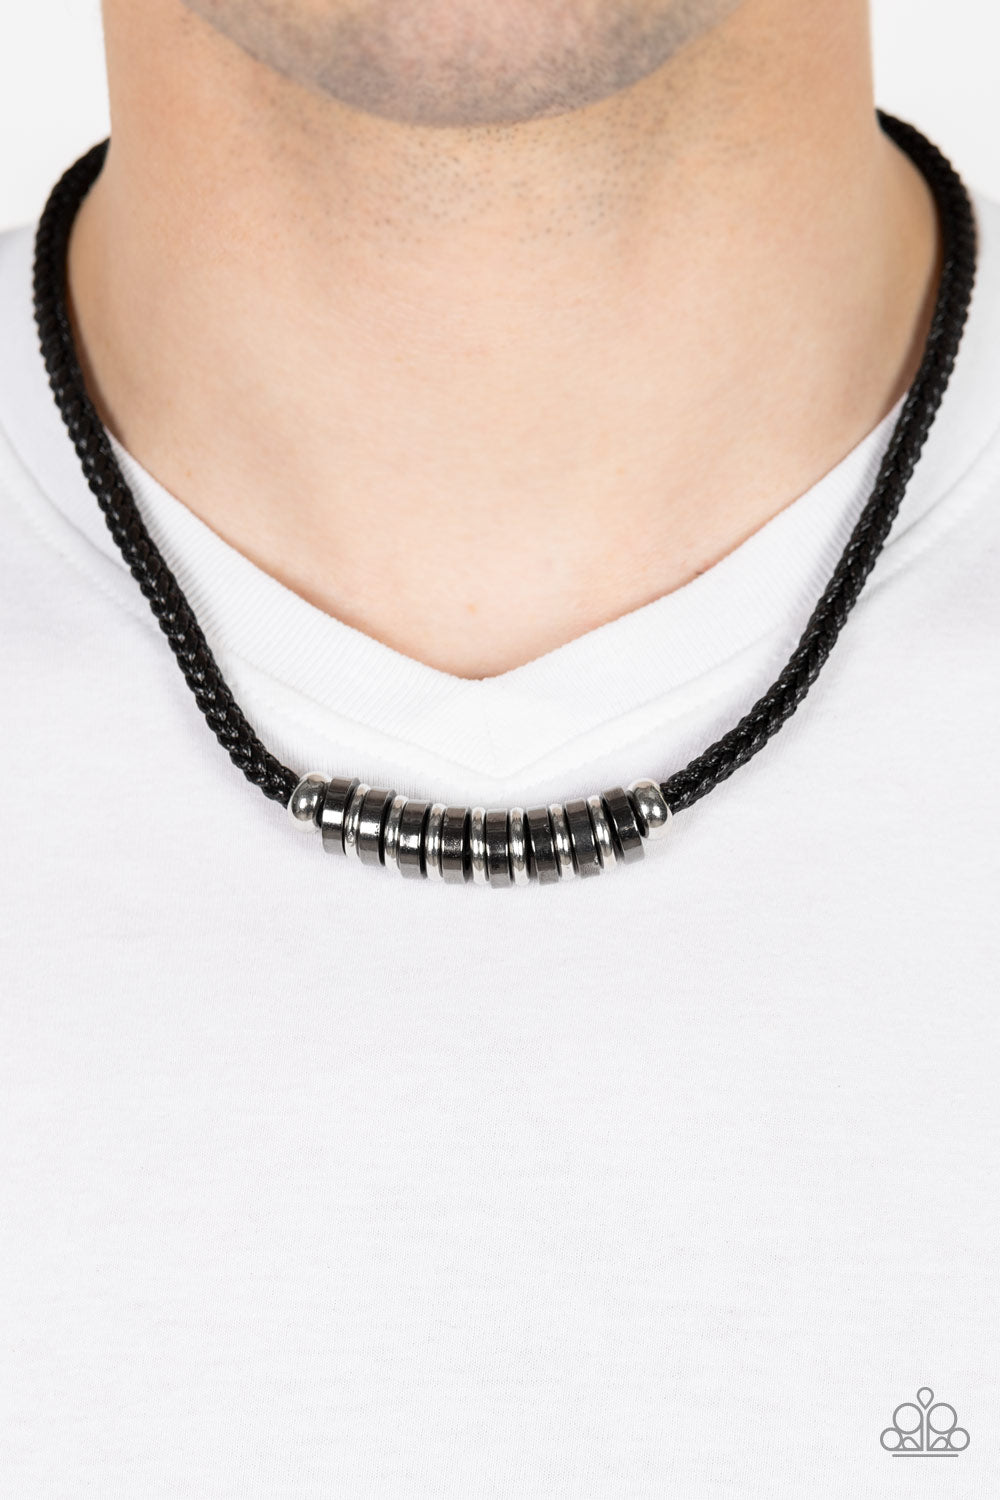 Prize Fashion Me Primitive Accessories Boutique - Bedazzle Necklace – Paparazzi Black - Pretty Mobile